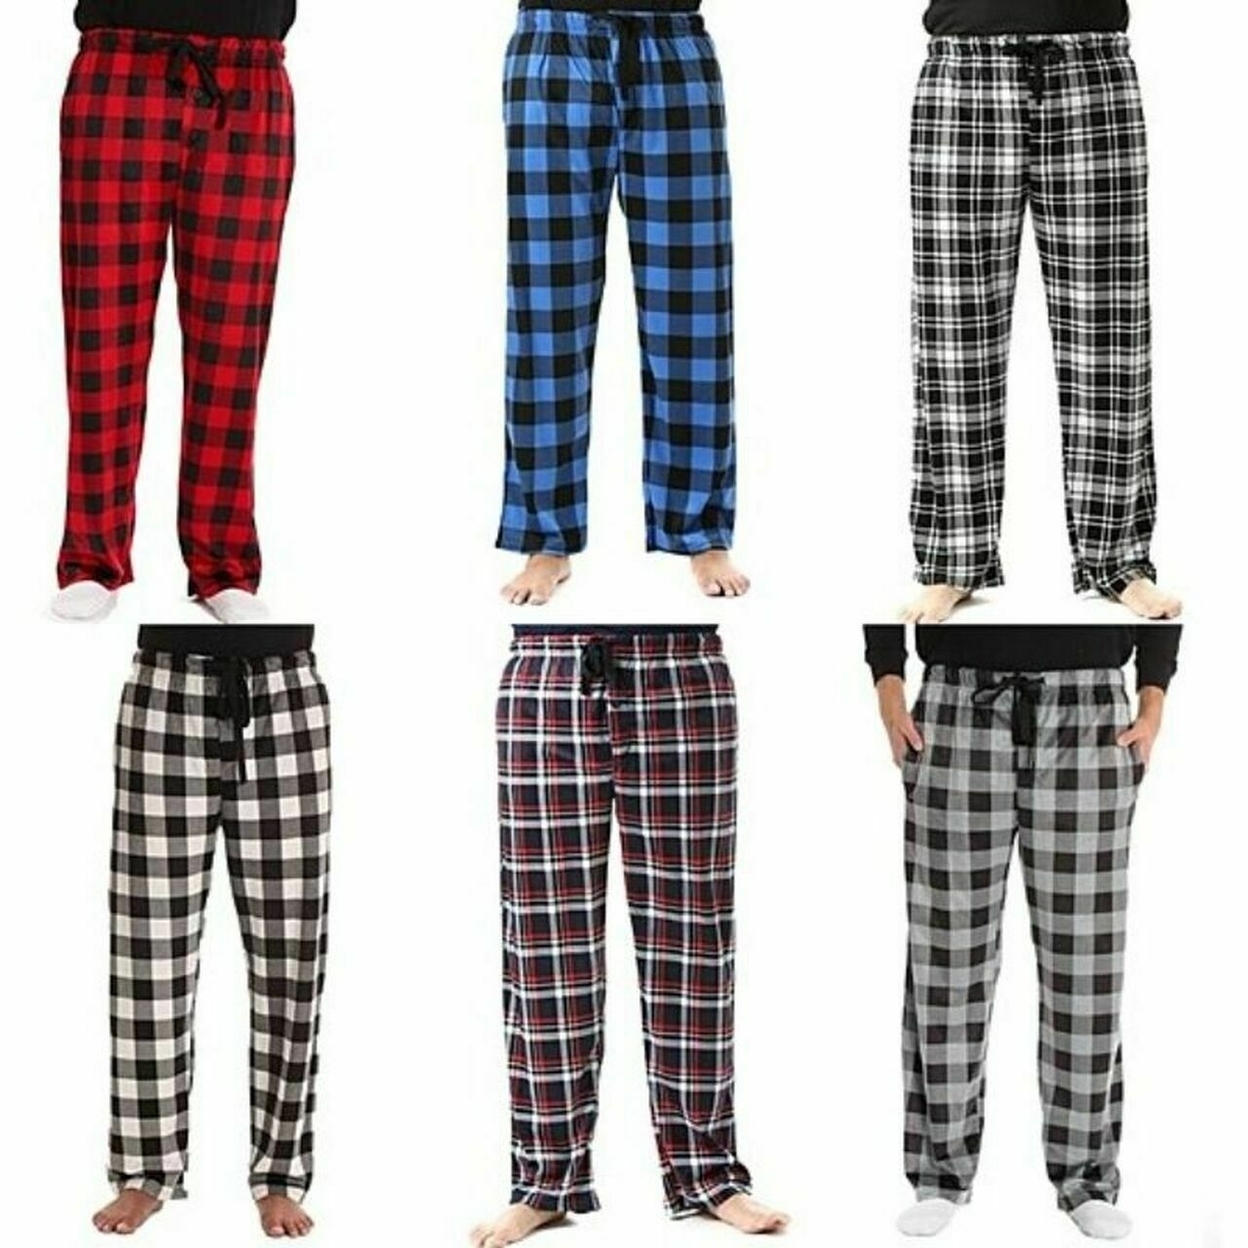 2-Pack: Men's Ultra Soft Cozy Flannel Fleece Plaid Pajama Sleep Bottom Lounge Pants - Black & Grey, Medium